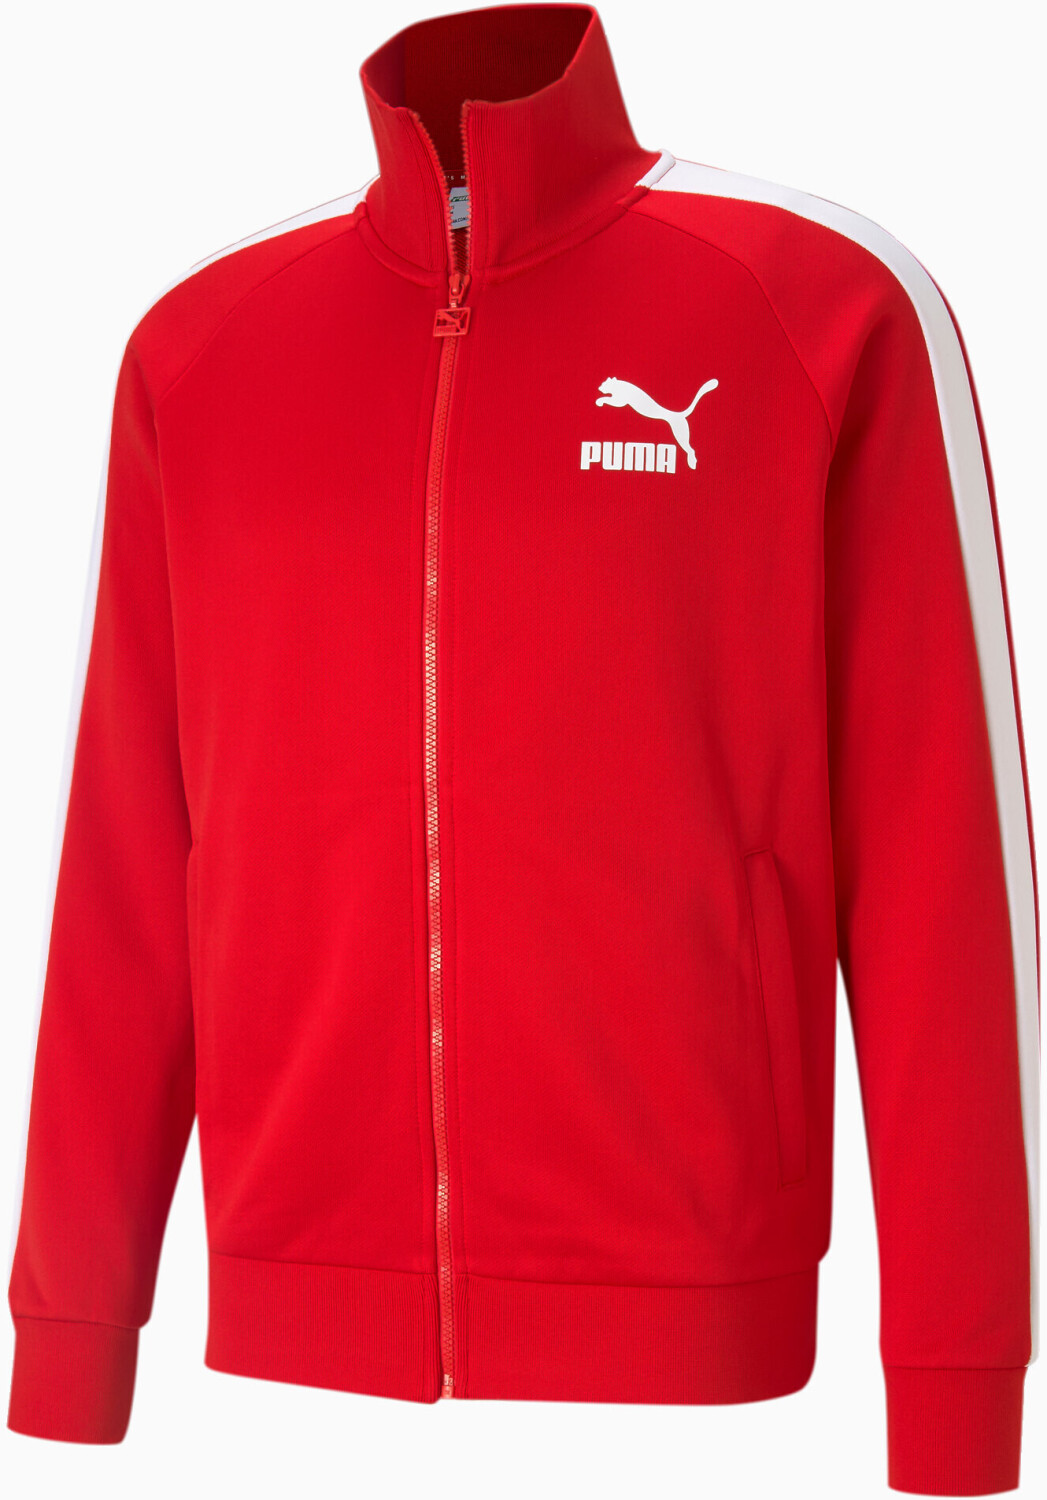 bei 45,95 (530094) risk | Men\'s € Puma T7 Preisvergleich Jacket Iconic Track high red ab